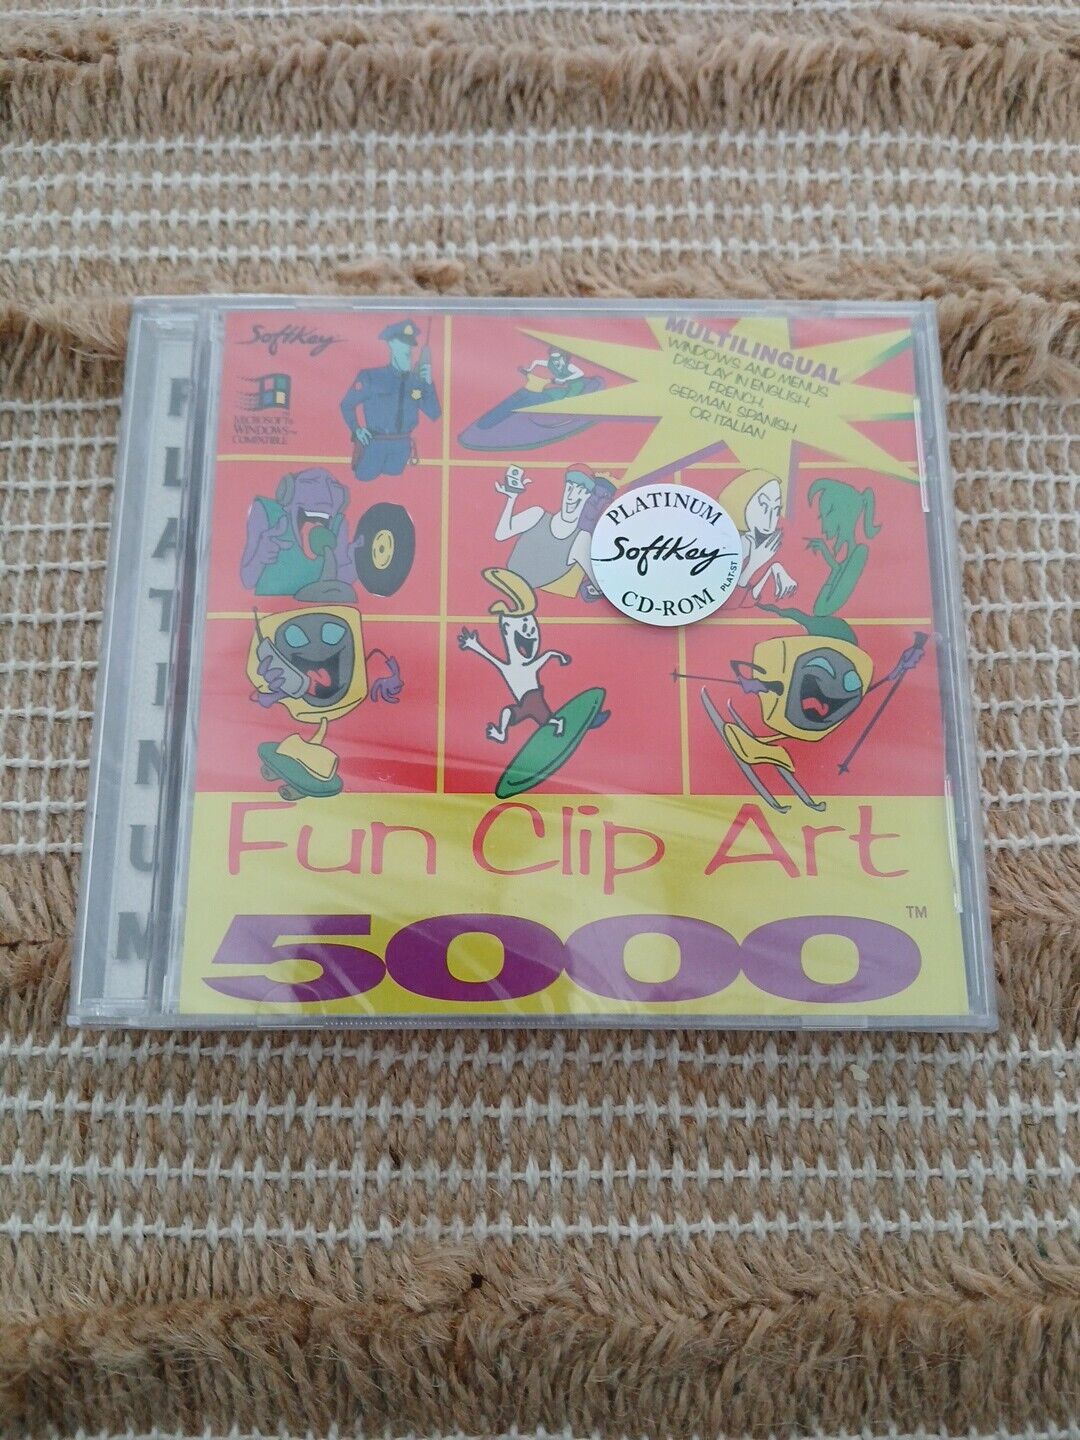 Fun Clip Art 5000 Vintage PC Software (CD-Rom, 1996, SoftKey) New Sealed